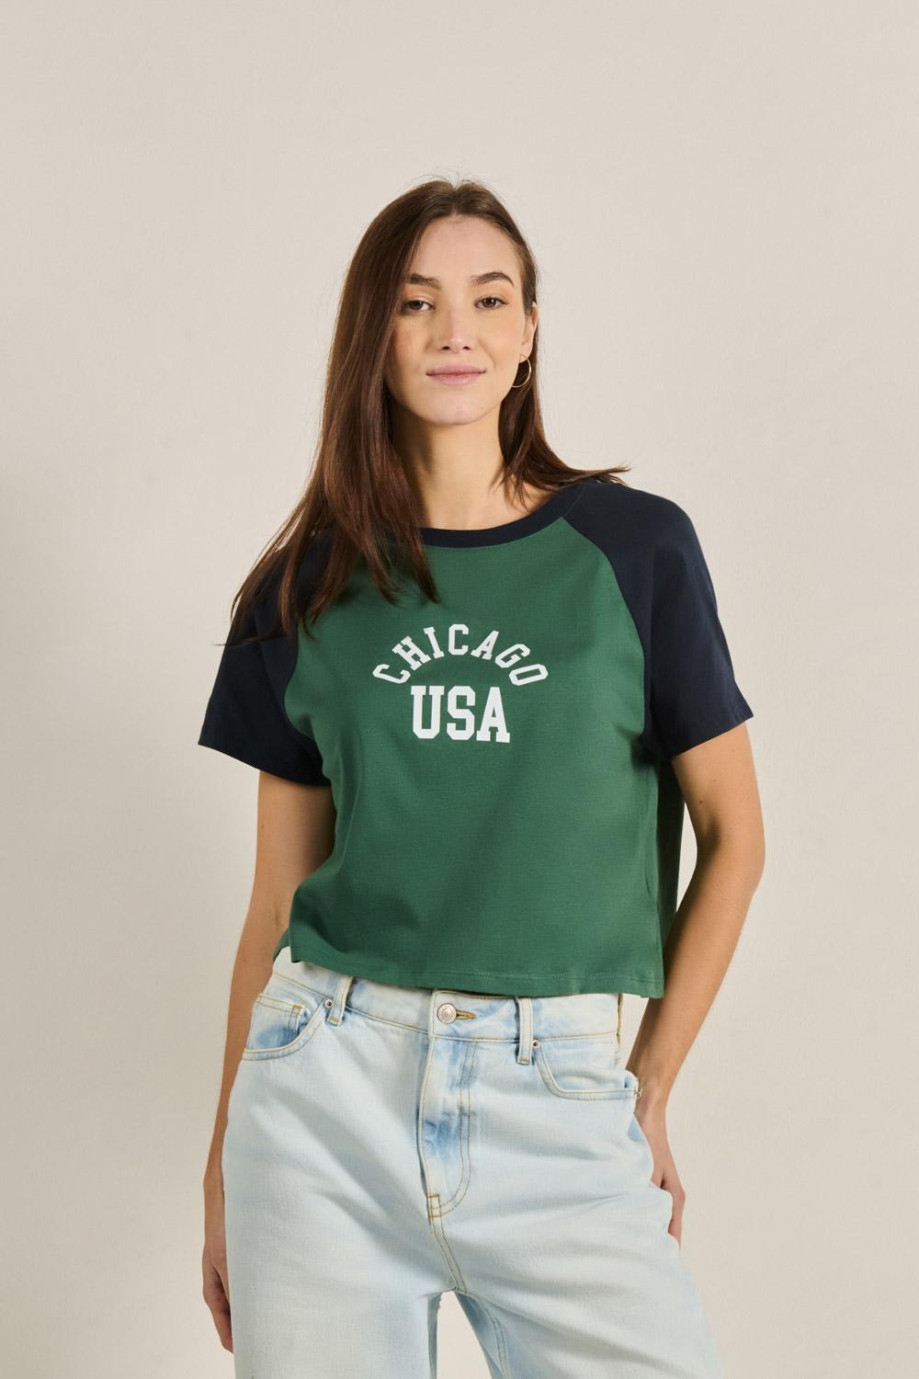 Camiseta unicolor crop top con texto college y manga ranglan